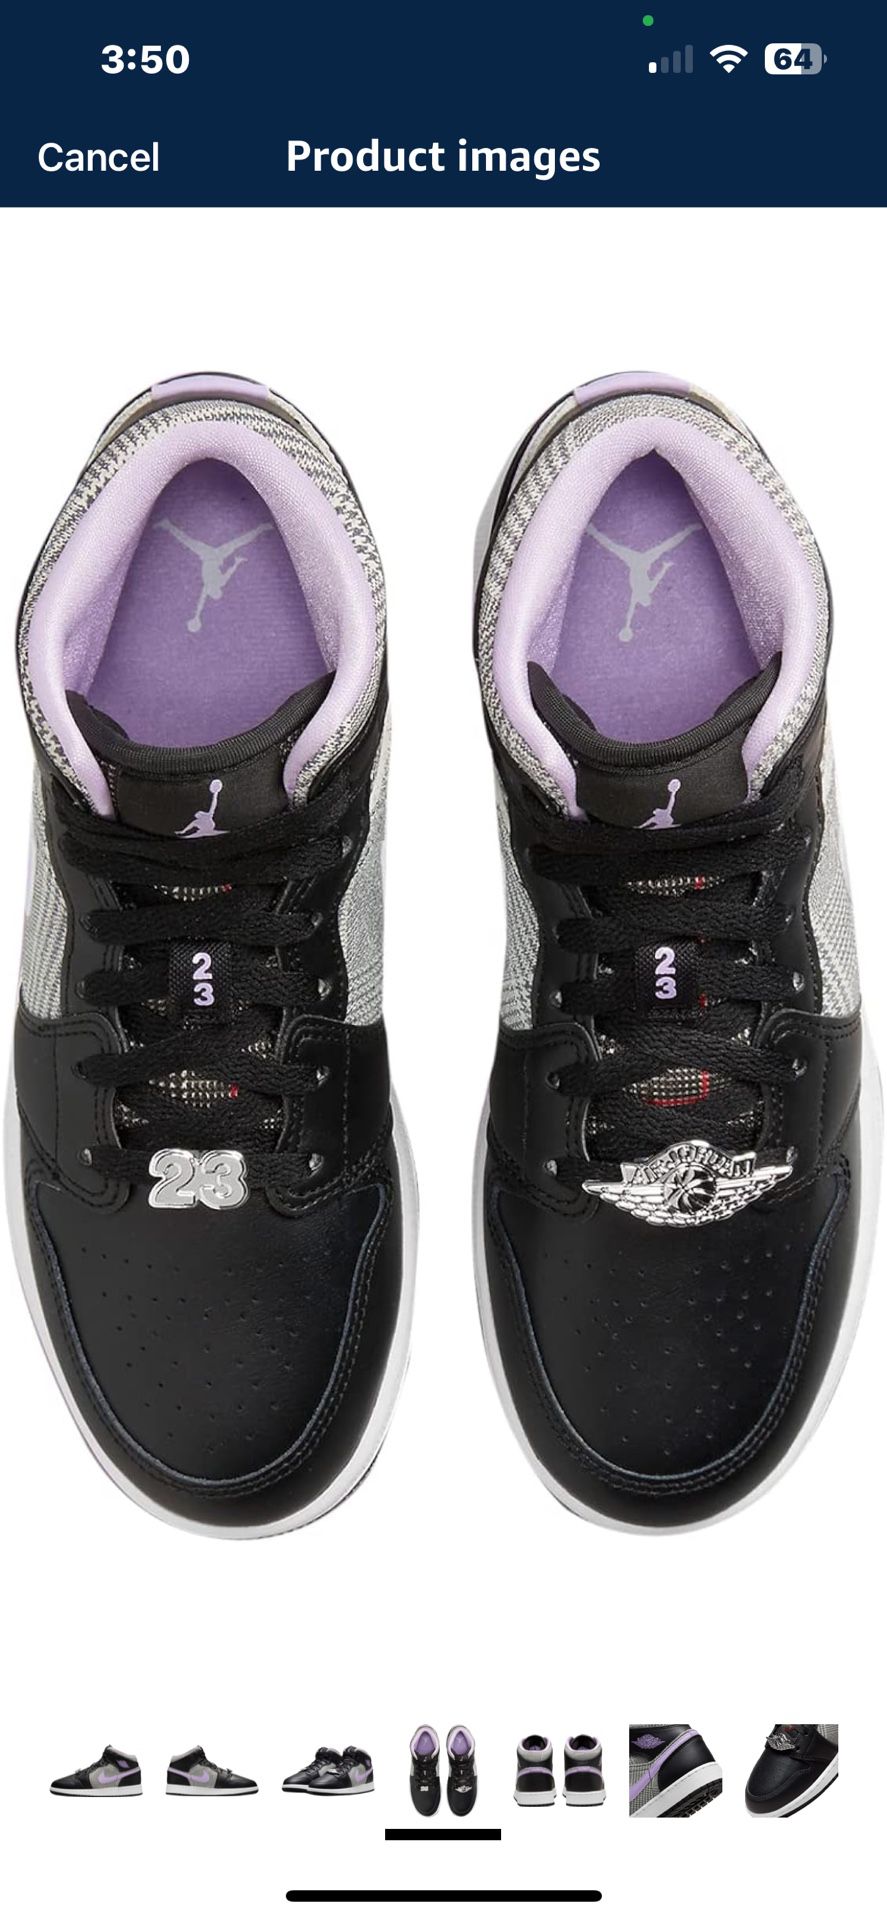 Air Jordan’s 1 Nike